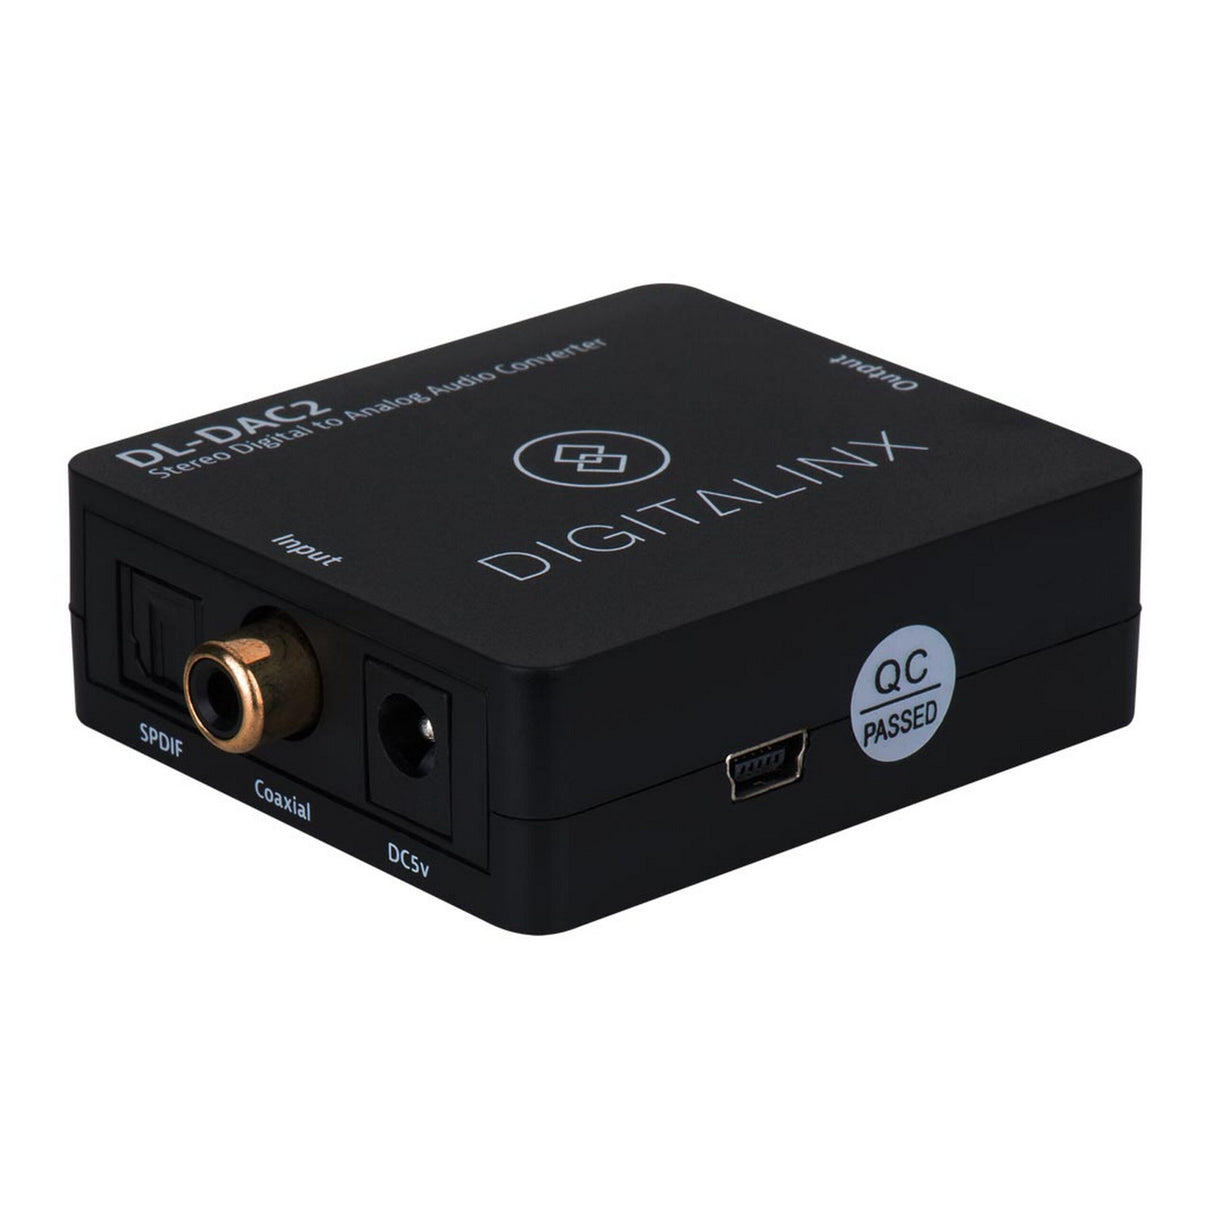 DigitaLinx DL-DAC2 Stereo Digital to Analog Audio Converter